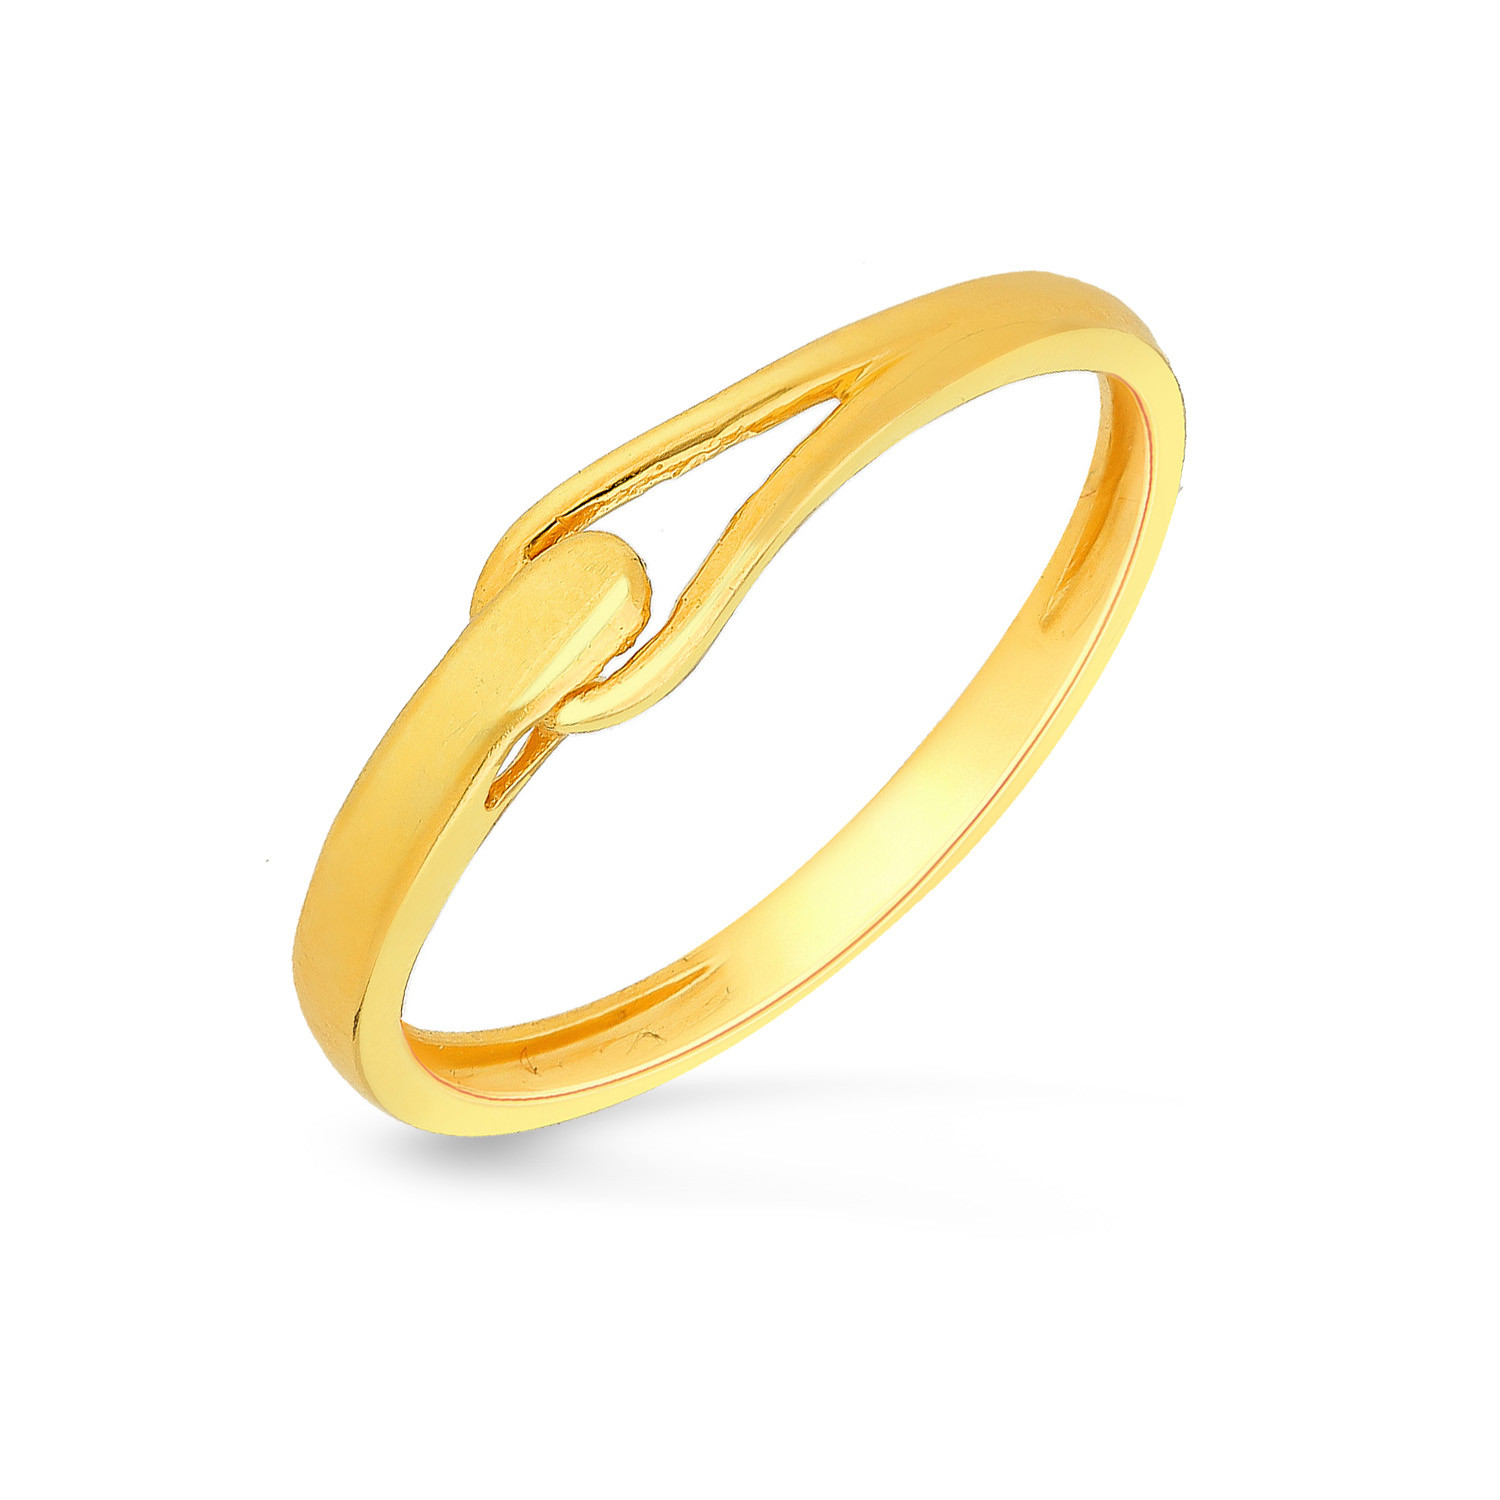 Malabar 22 KT Gold Studded Casual Ring FRGEDZRURGW728